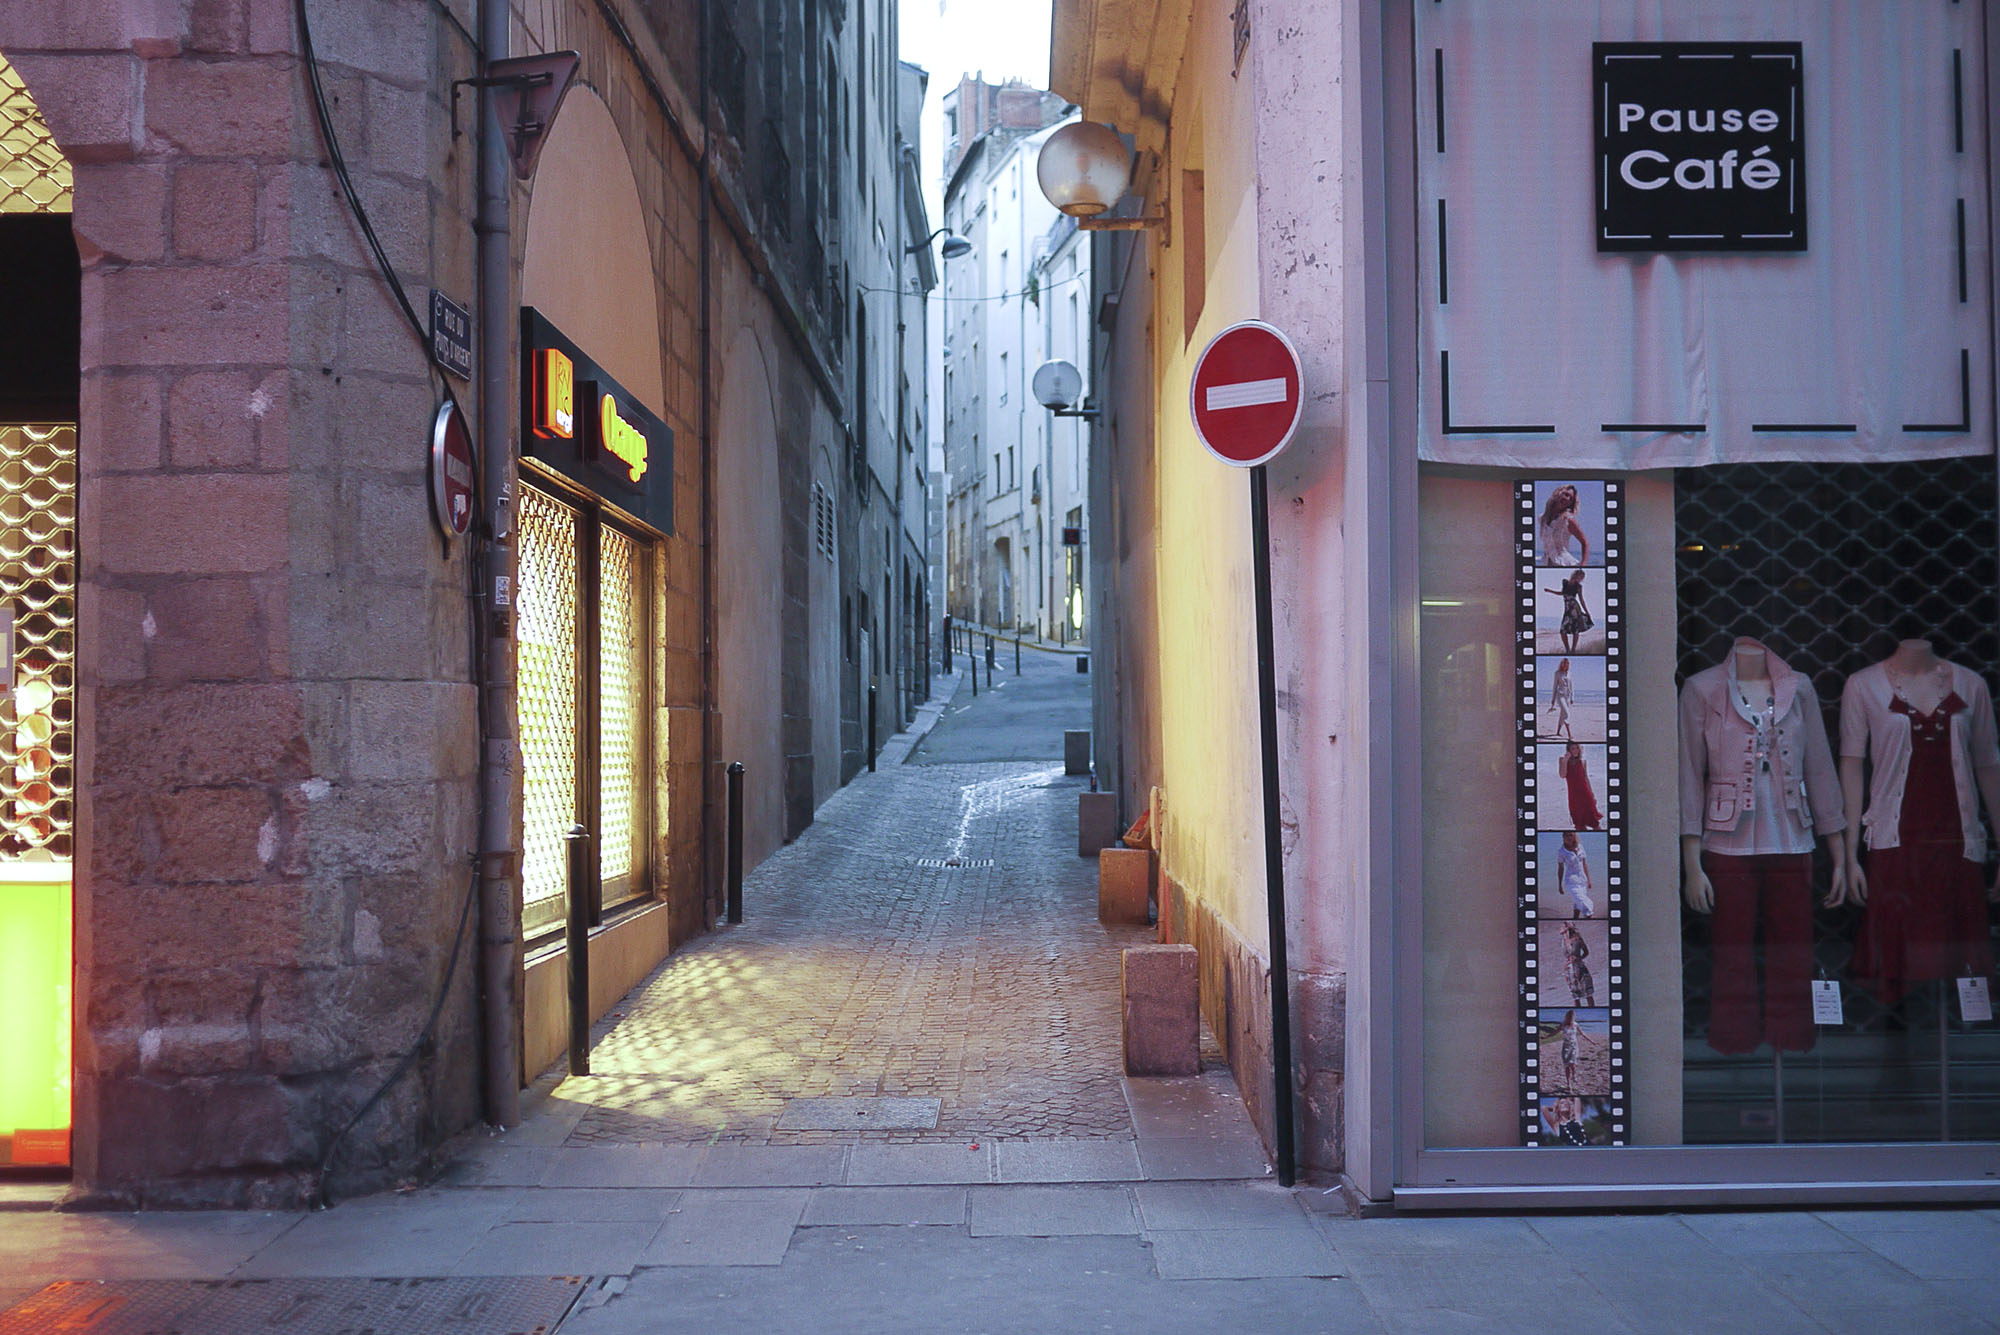 Fig. 29.11 Pedestrian alleyway in Nantes, France